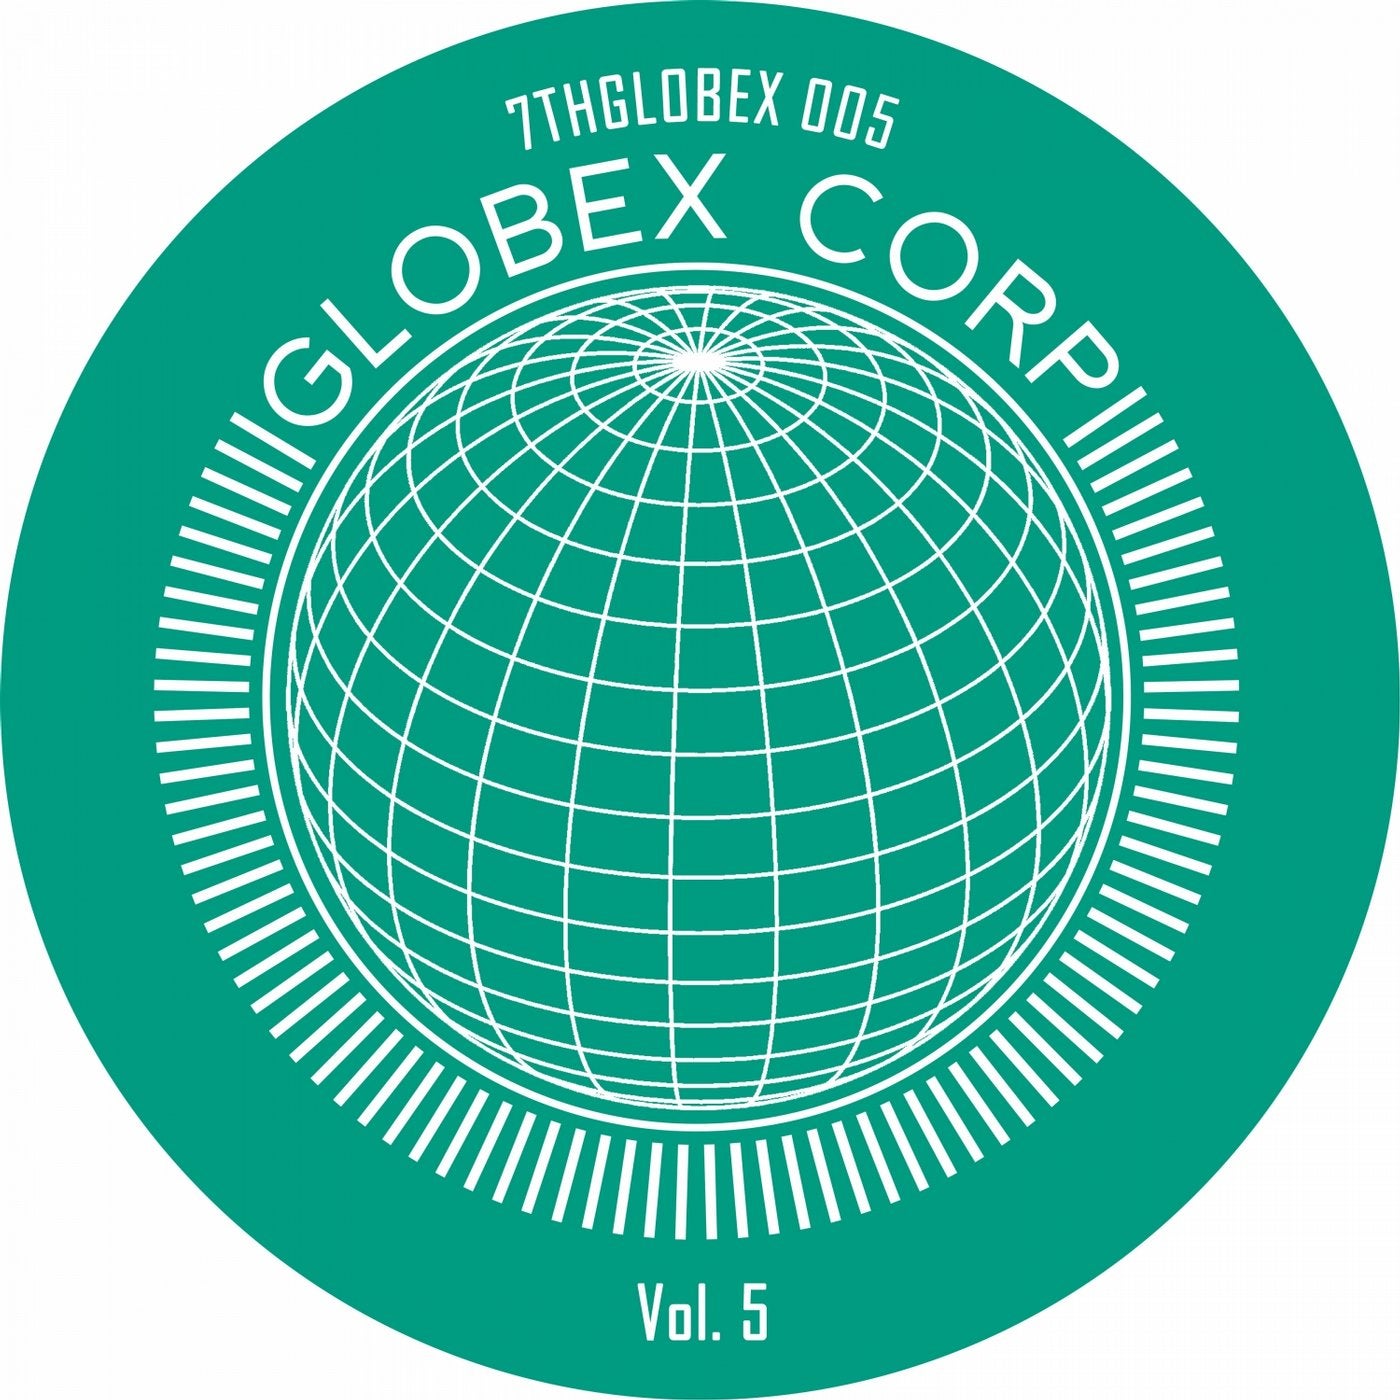 Globex Corp, Vol. 5